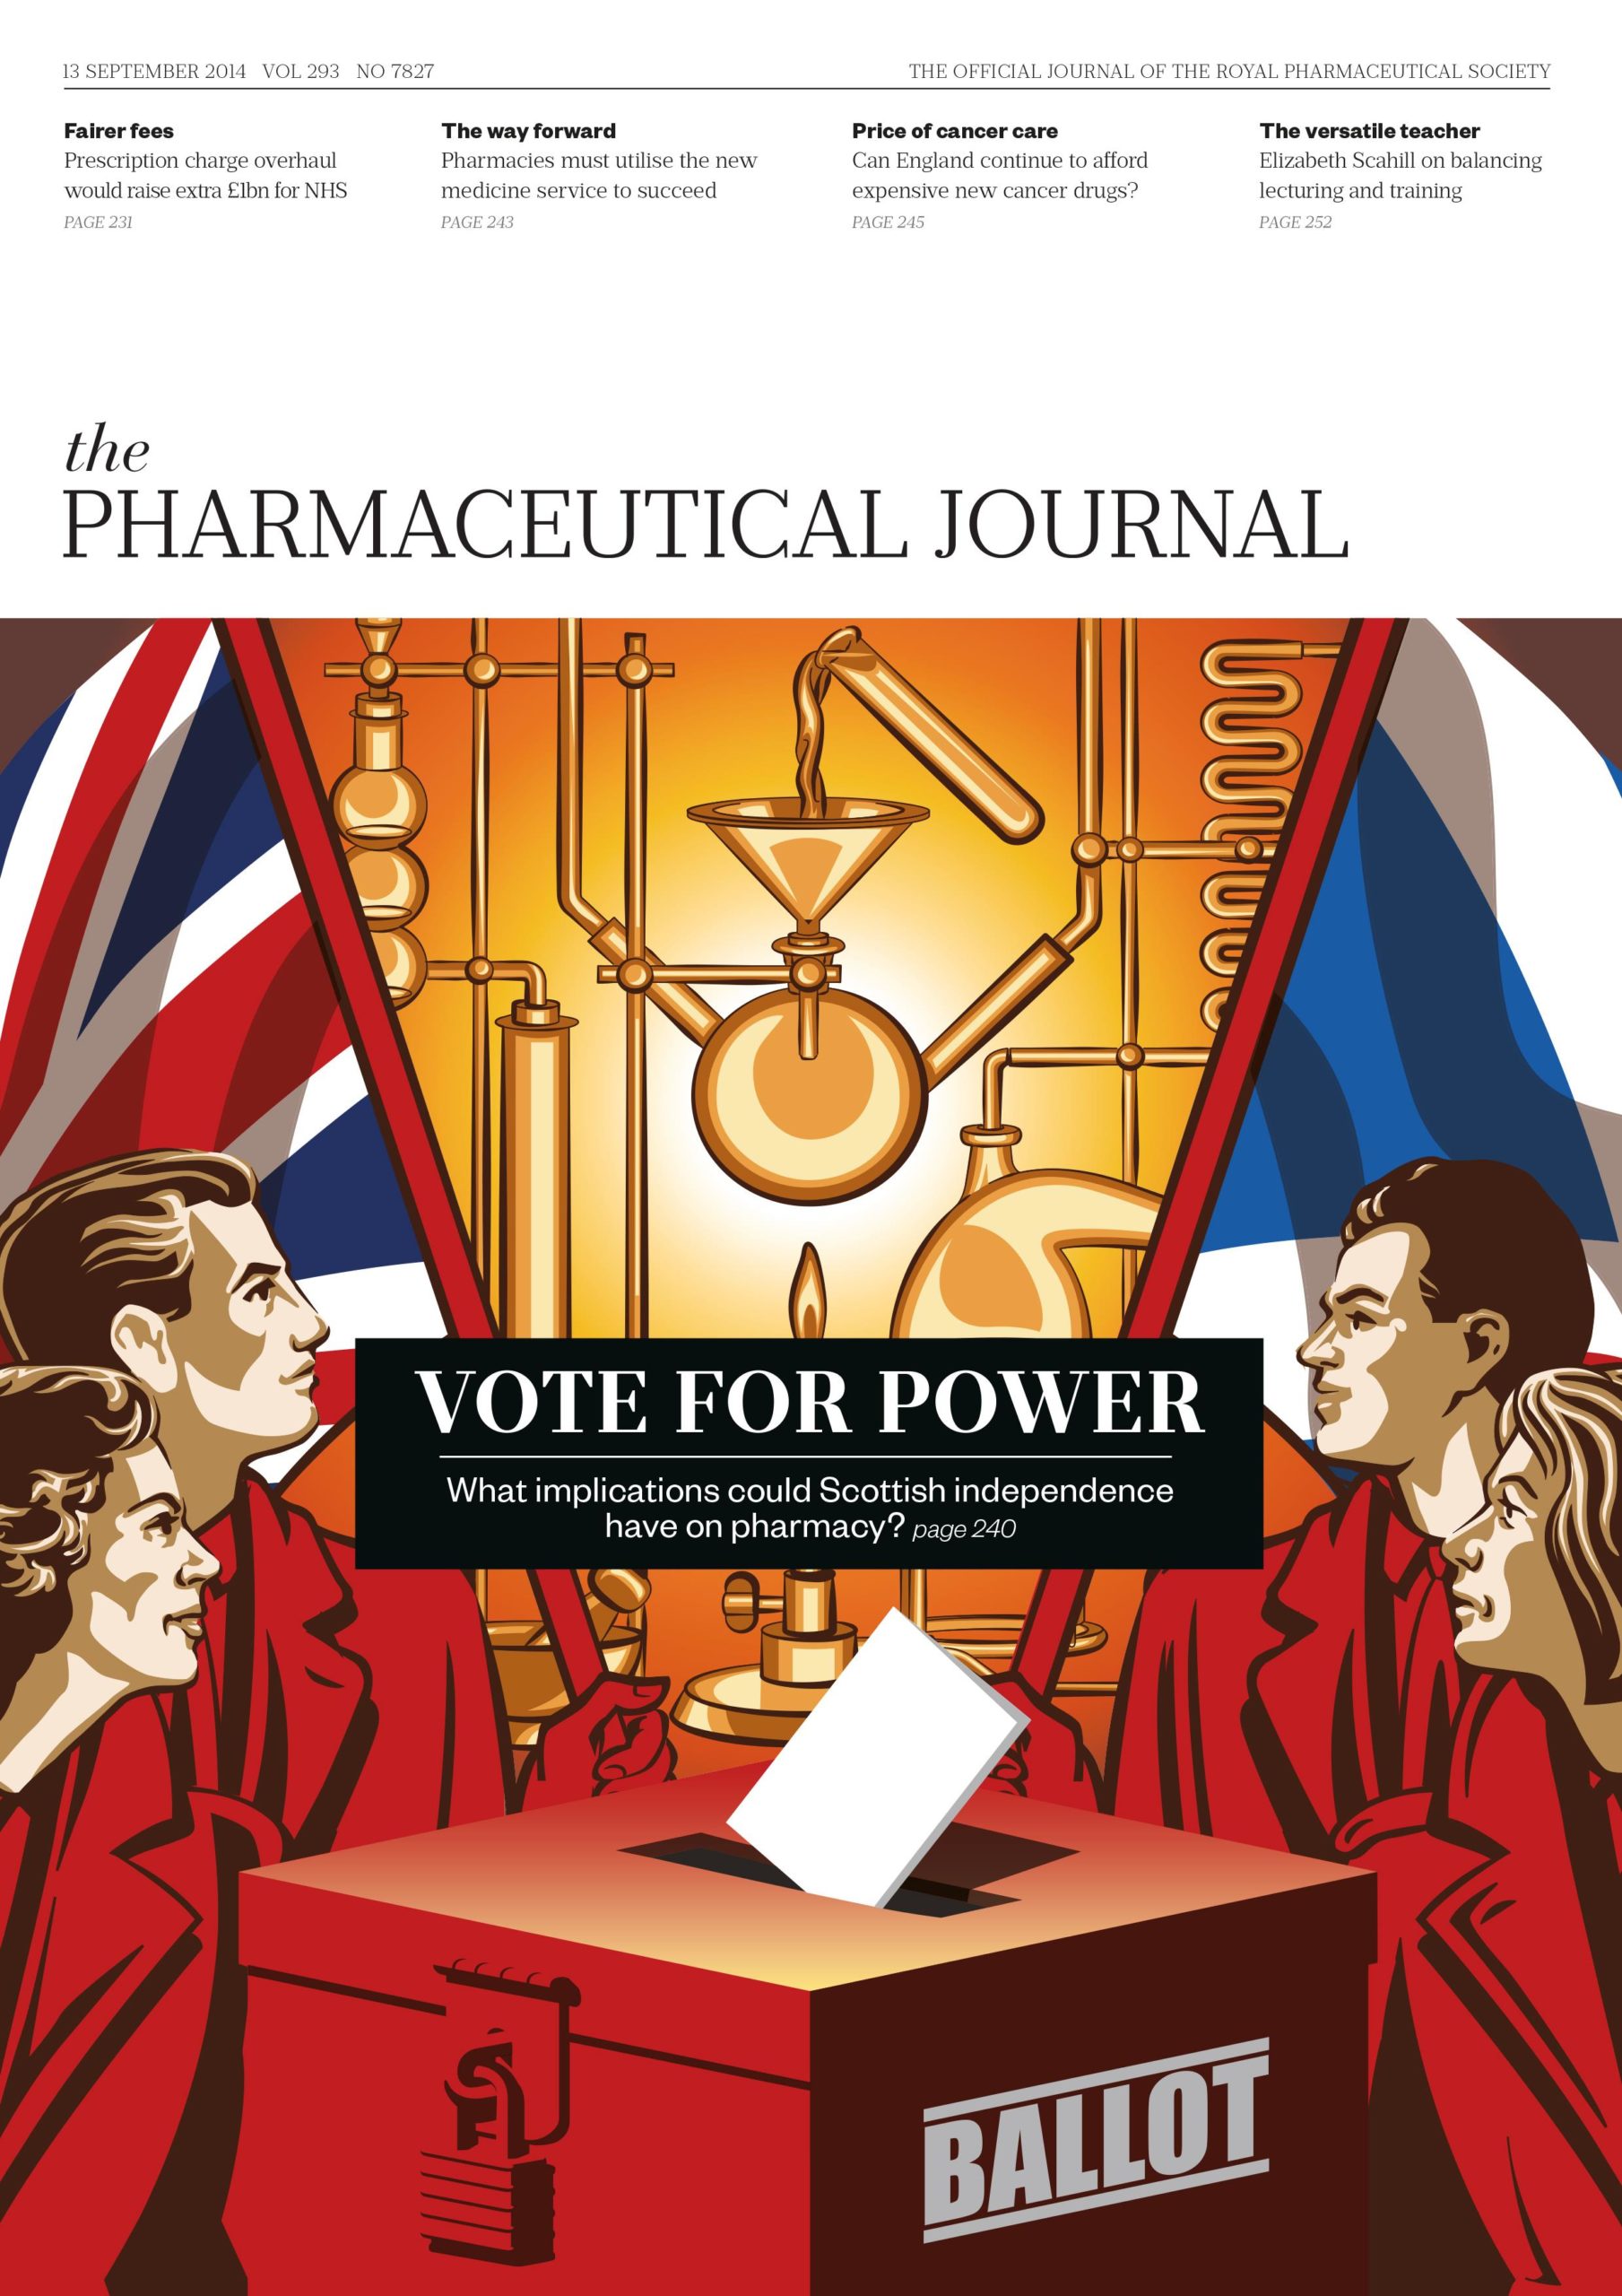 Publication issue cover for PJ, 13 September 2014, Vol 293, No 7827